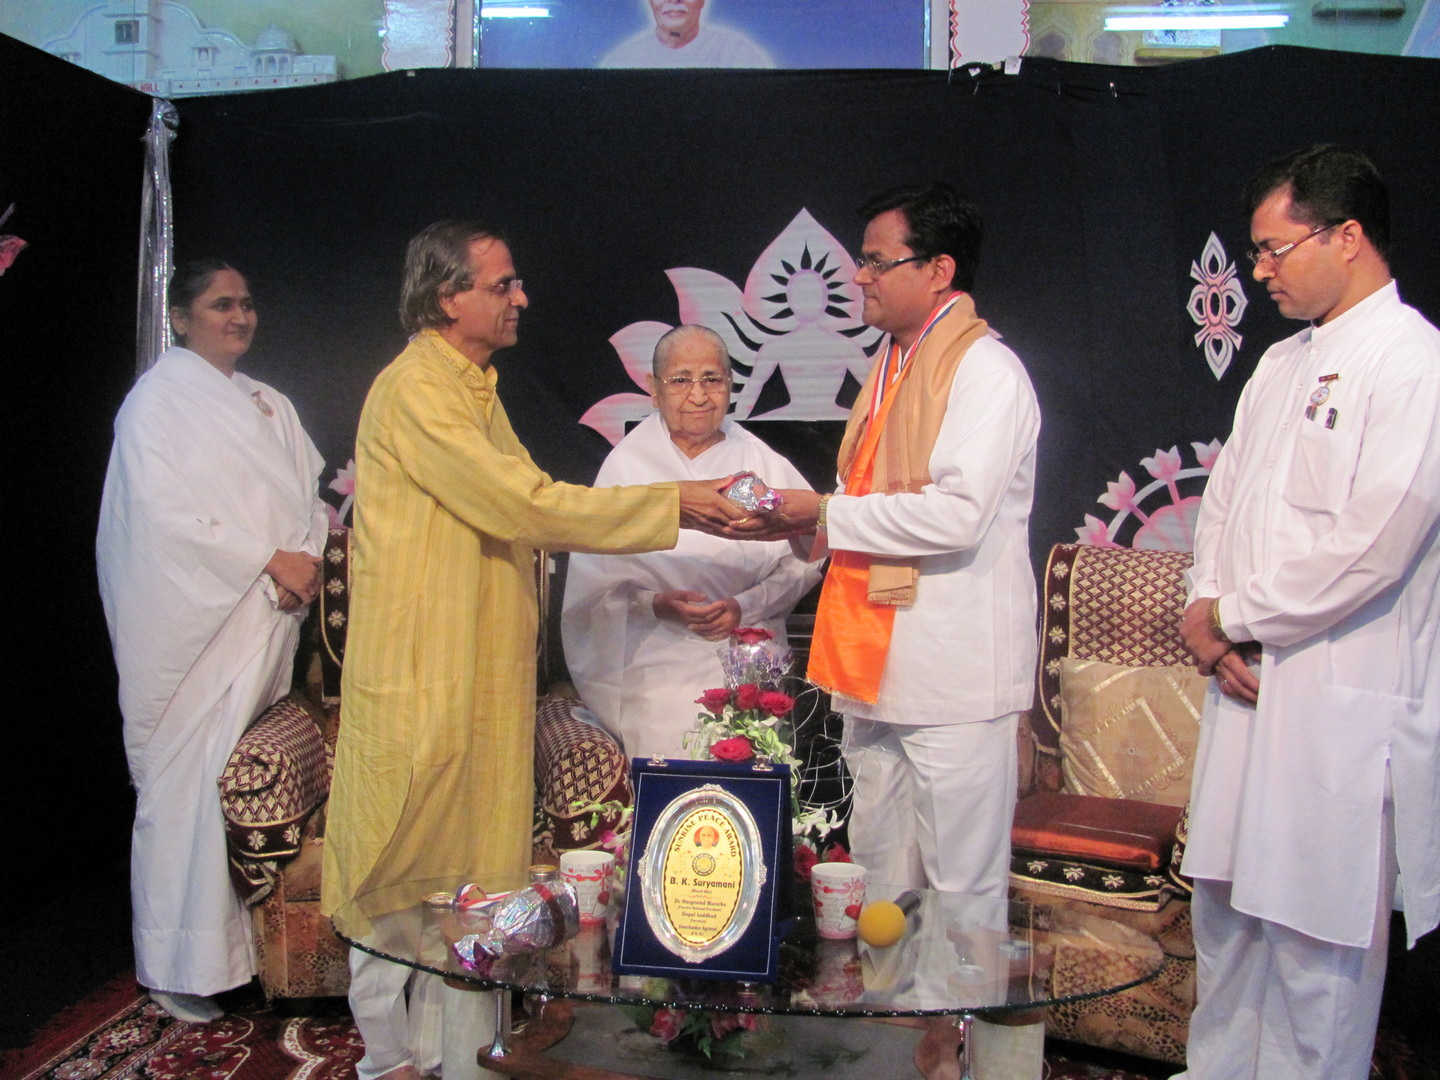 Bk suryamani receiving sunrise peace award at nagpur 2010